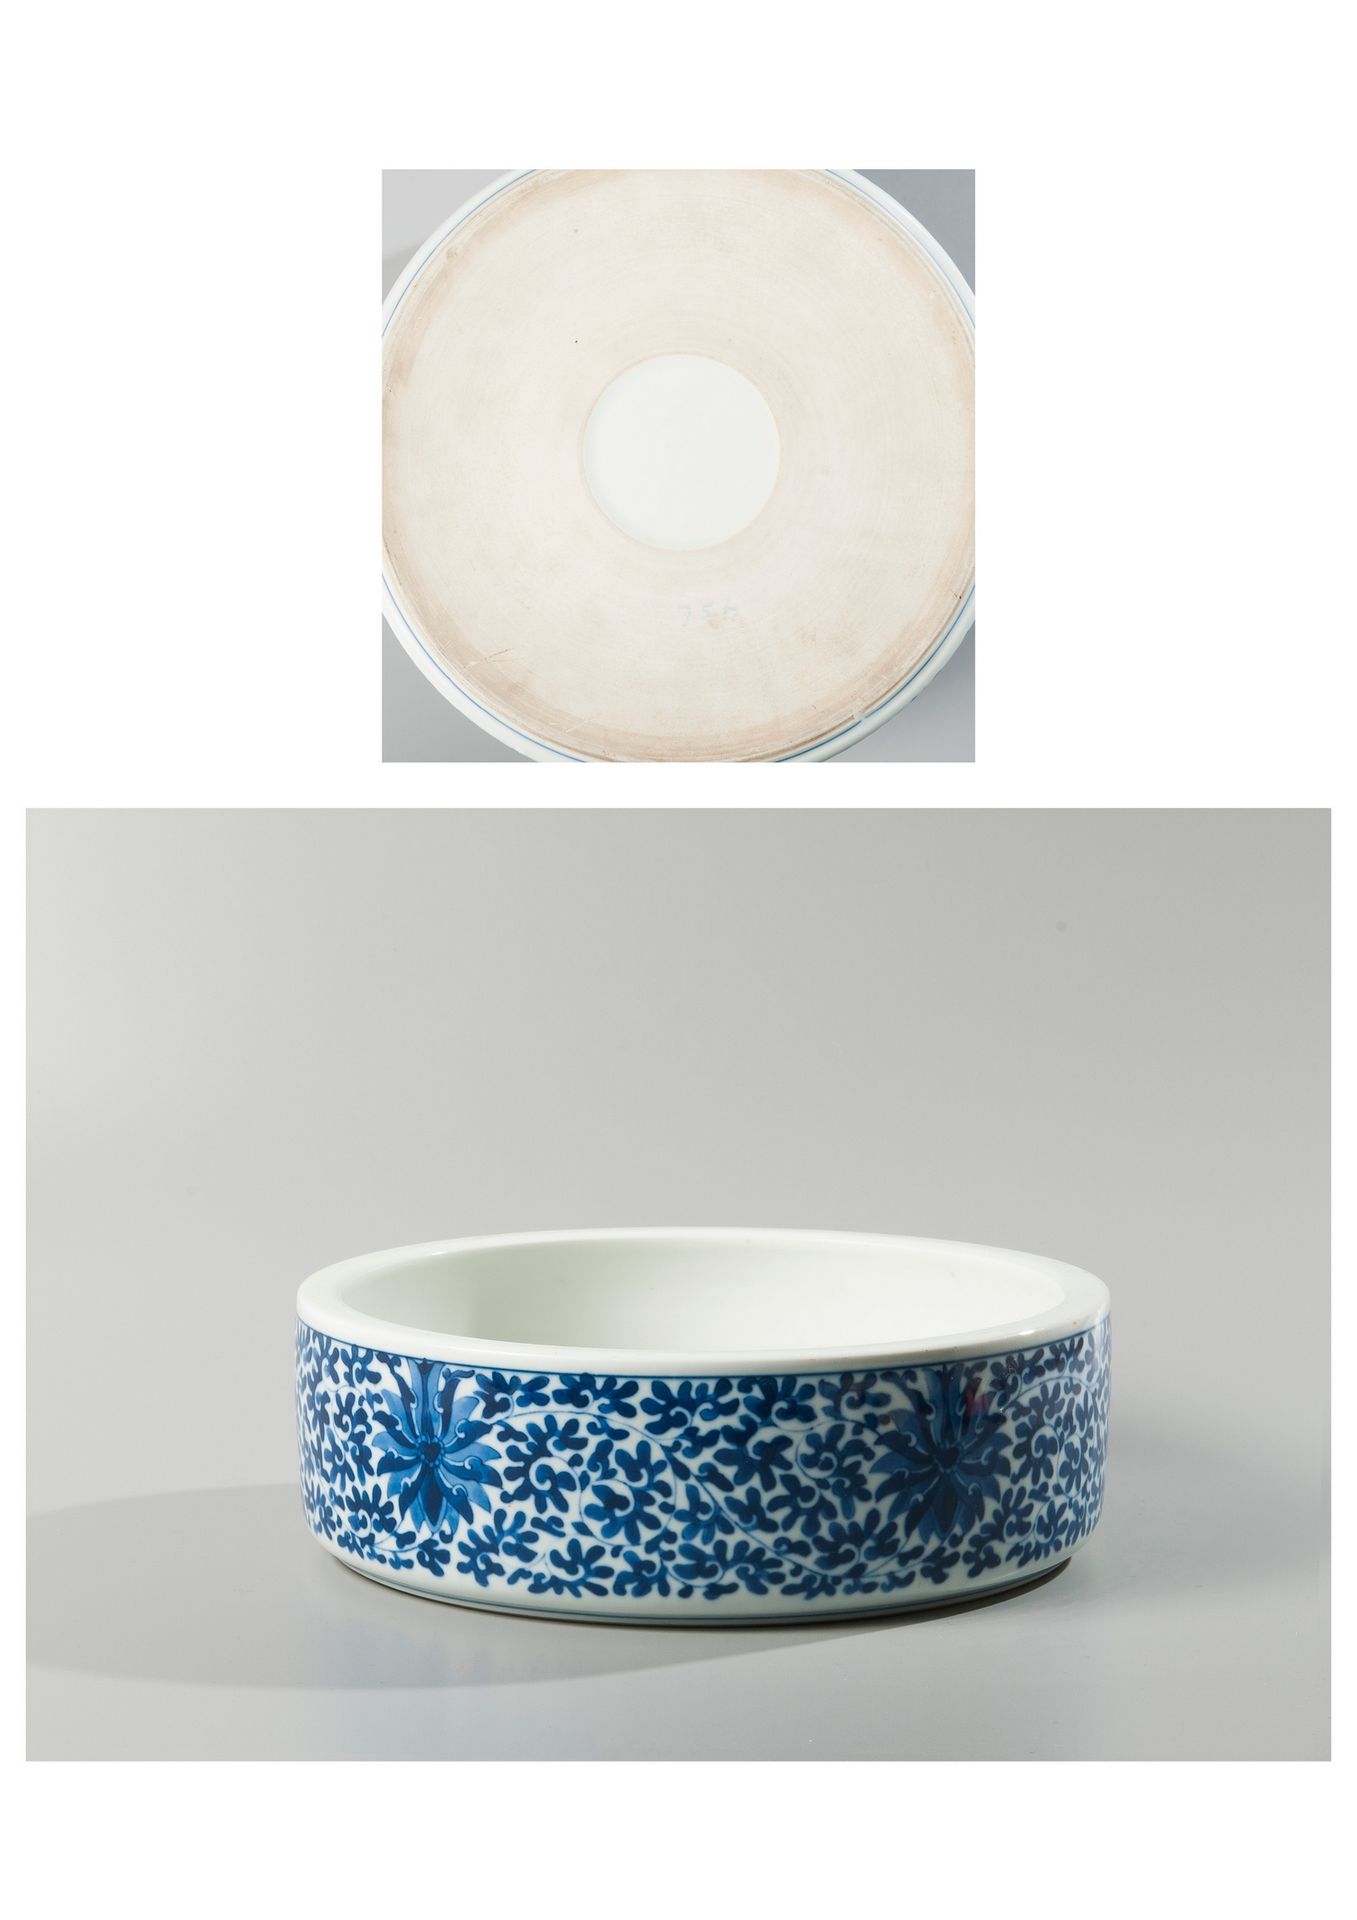 Null 中国，20世纪。

圆形蓝白珐琅彩瓷盆。边缘有花纹装饰。

D：24.9厘米；H：8厘米。

(脚下有一个小缺口)